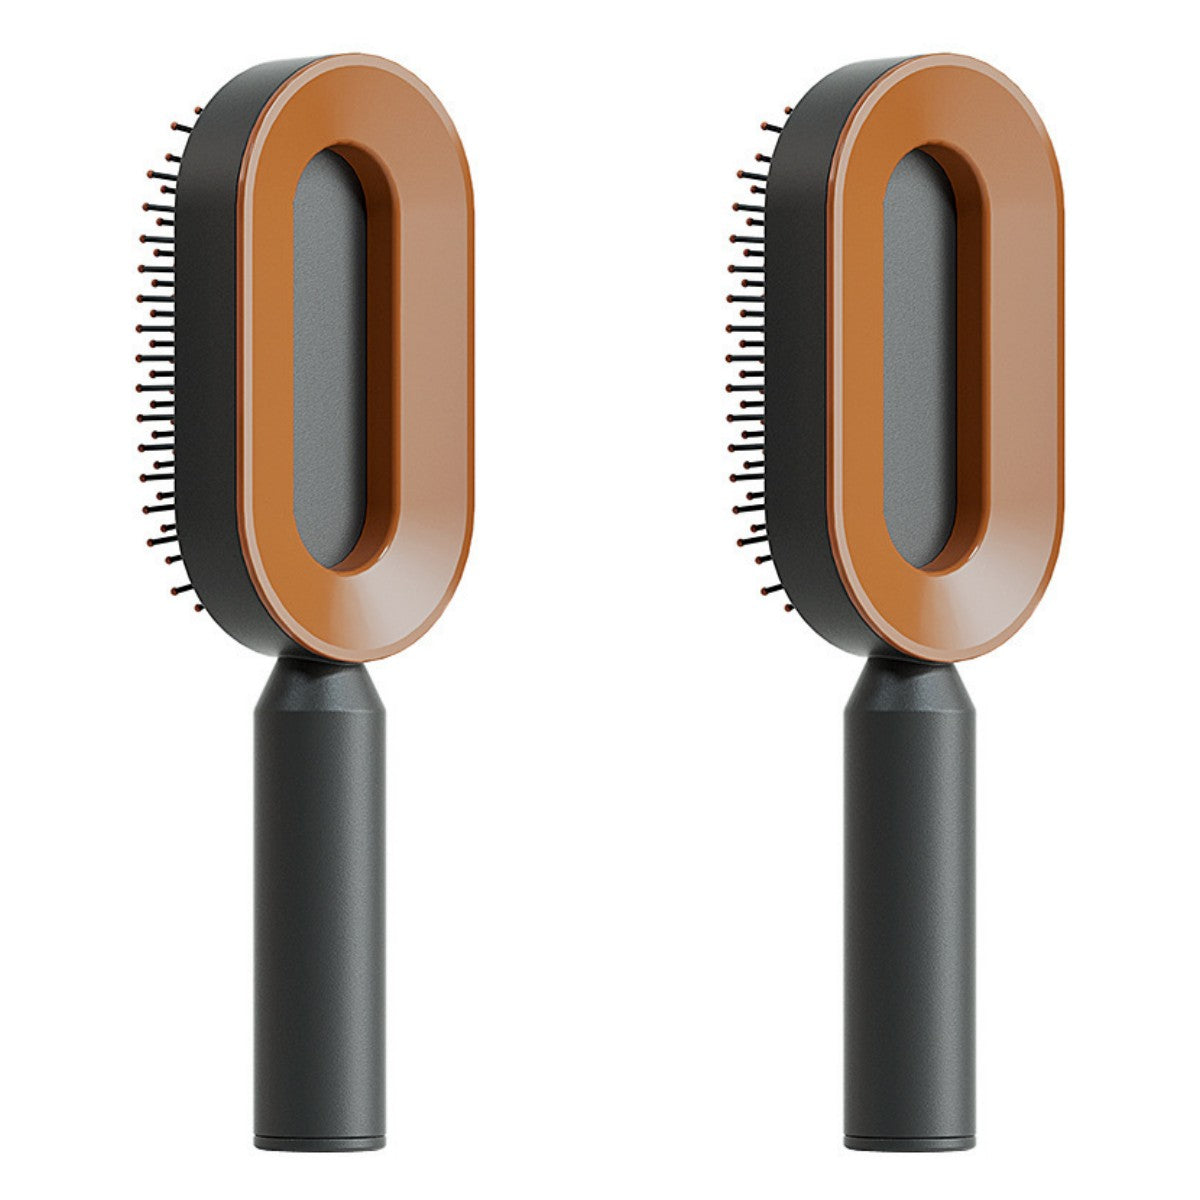 Self Cleaning Hair Brush For Women  Anti Static